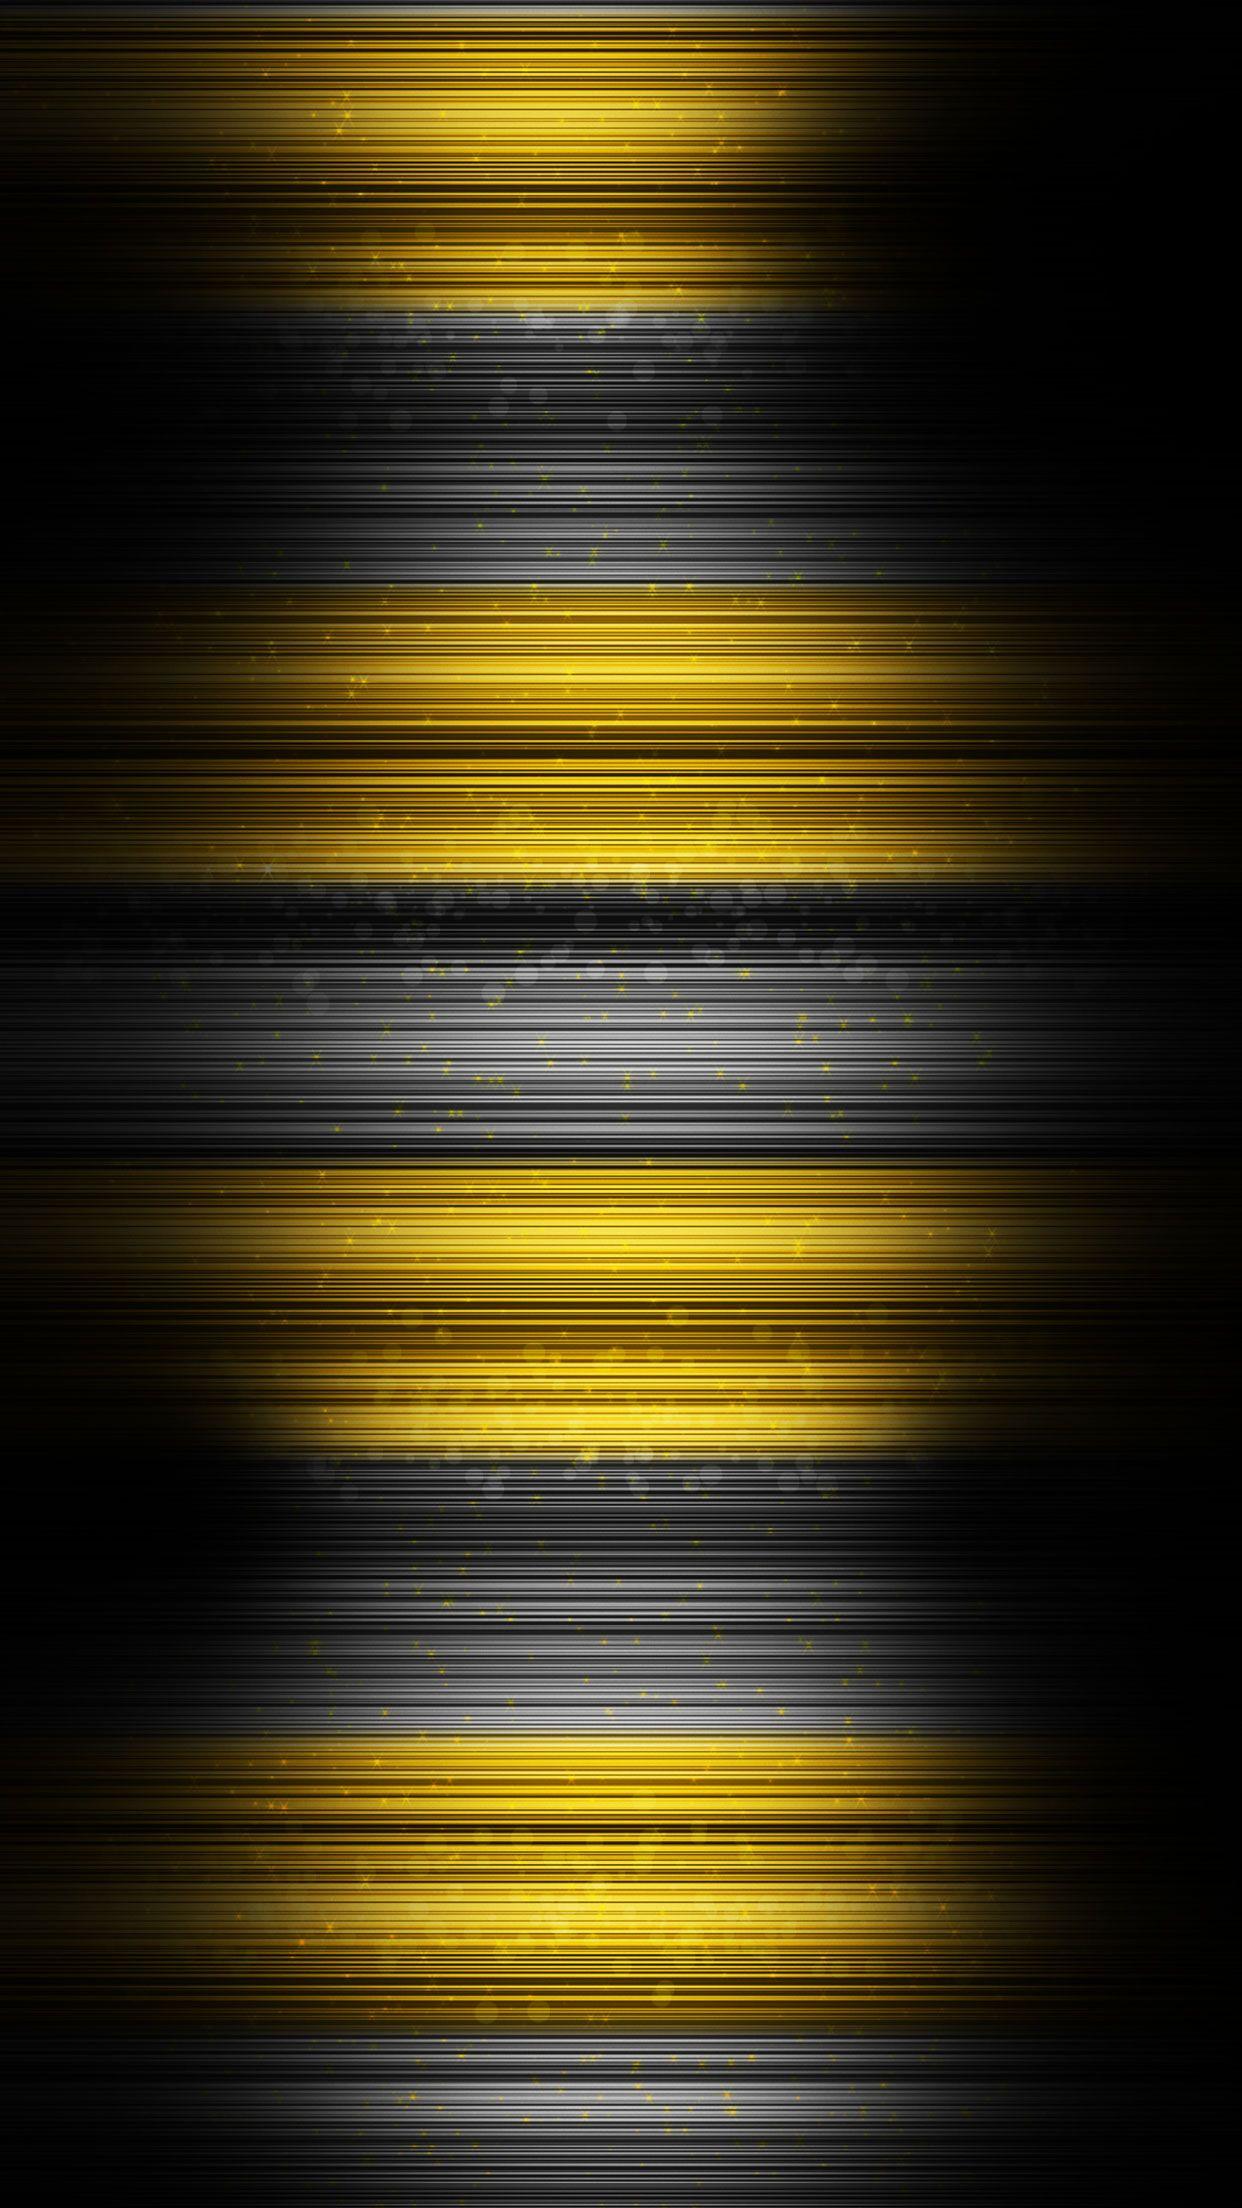  Yellow  Black  Wallpapers  Wallpaper  Cave